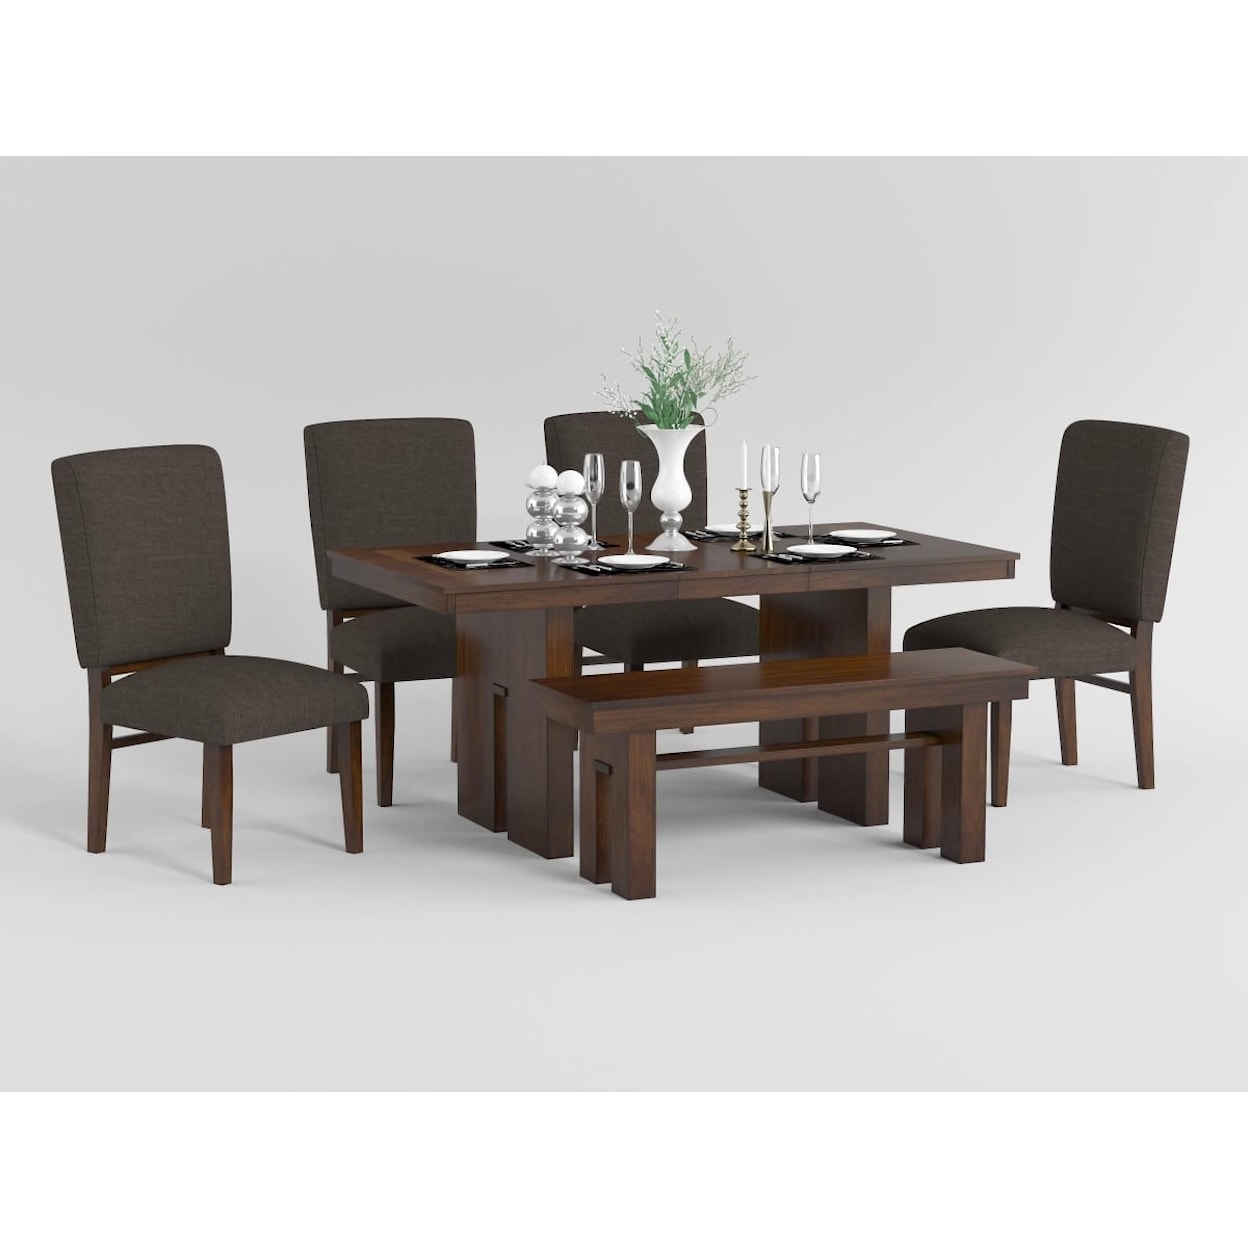 Homelegance Furniture Sedley Dining Table